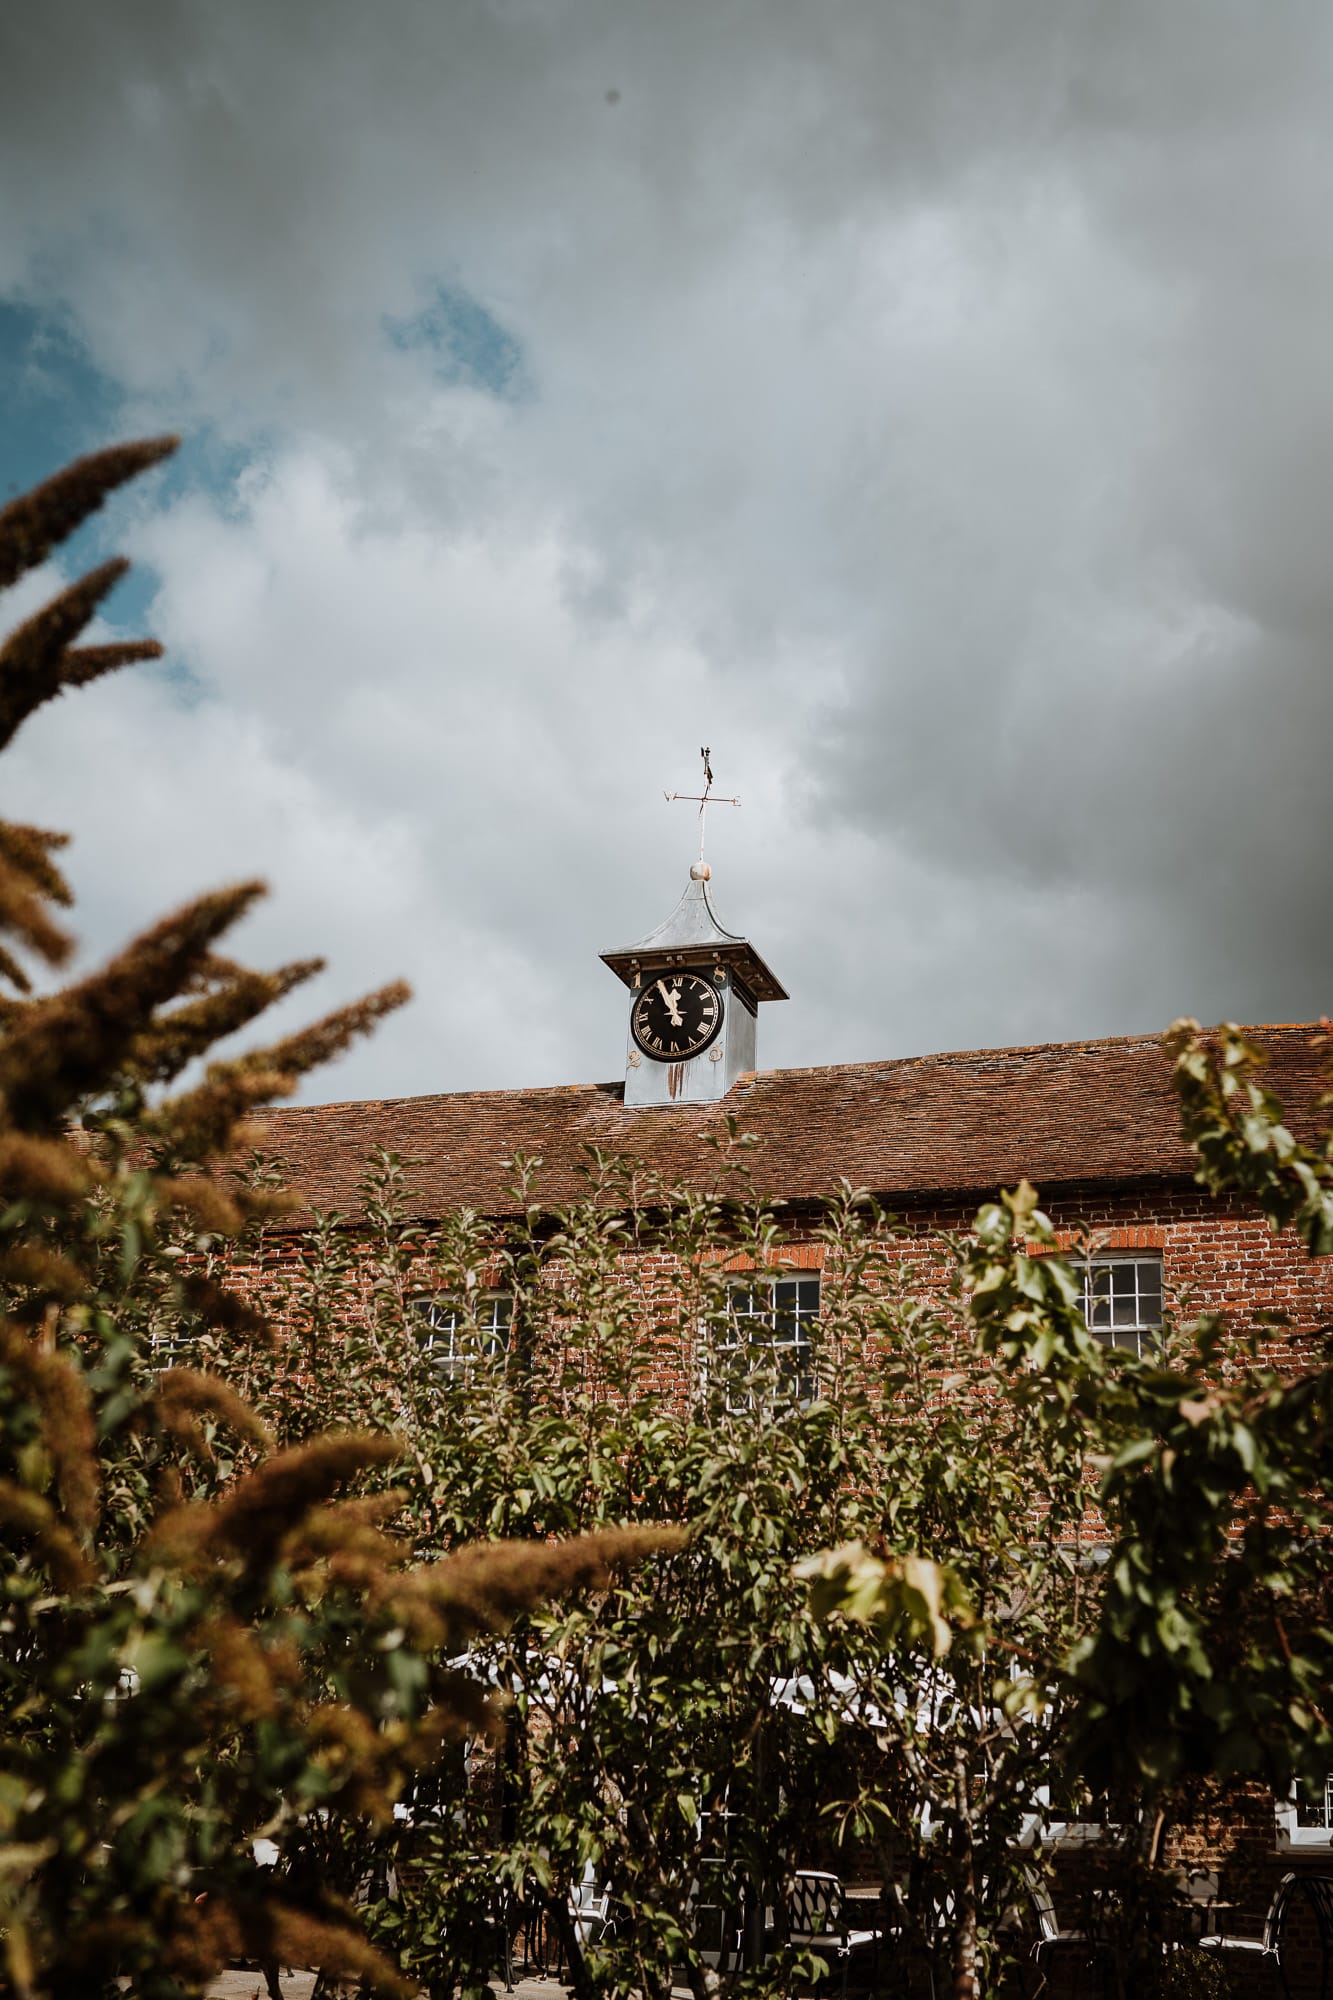 The clocktower at The Secret Garden Wedding venue in Ashford